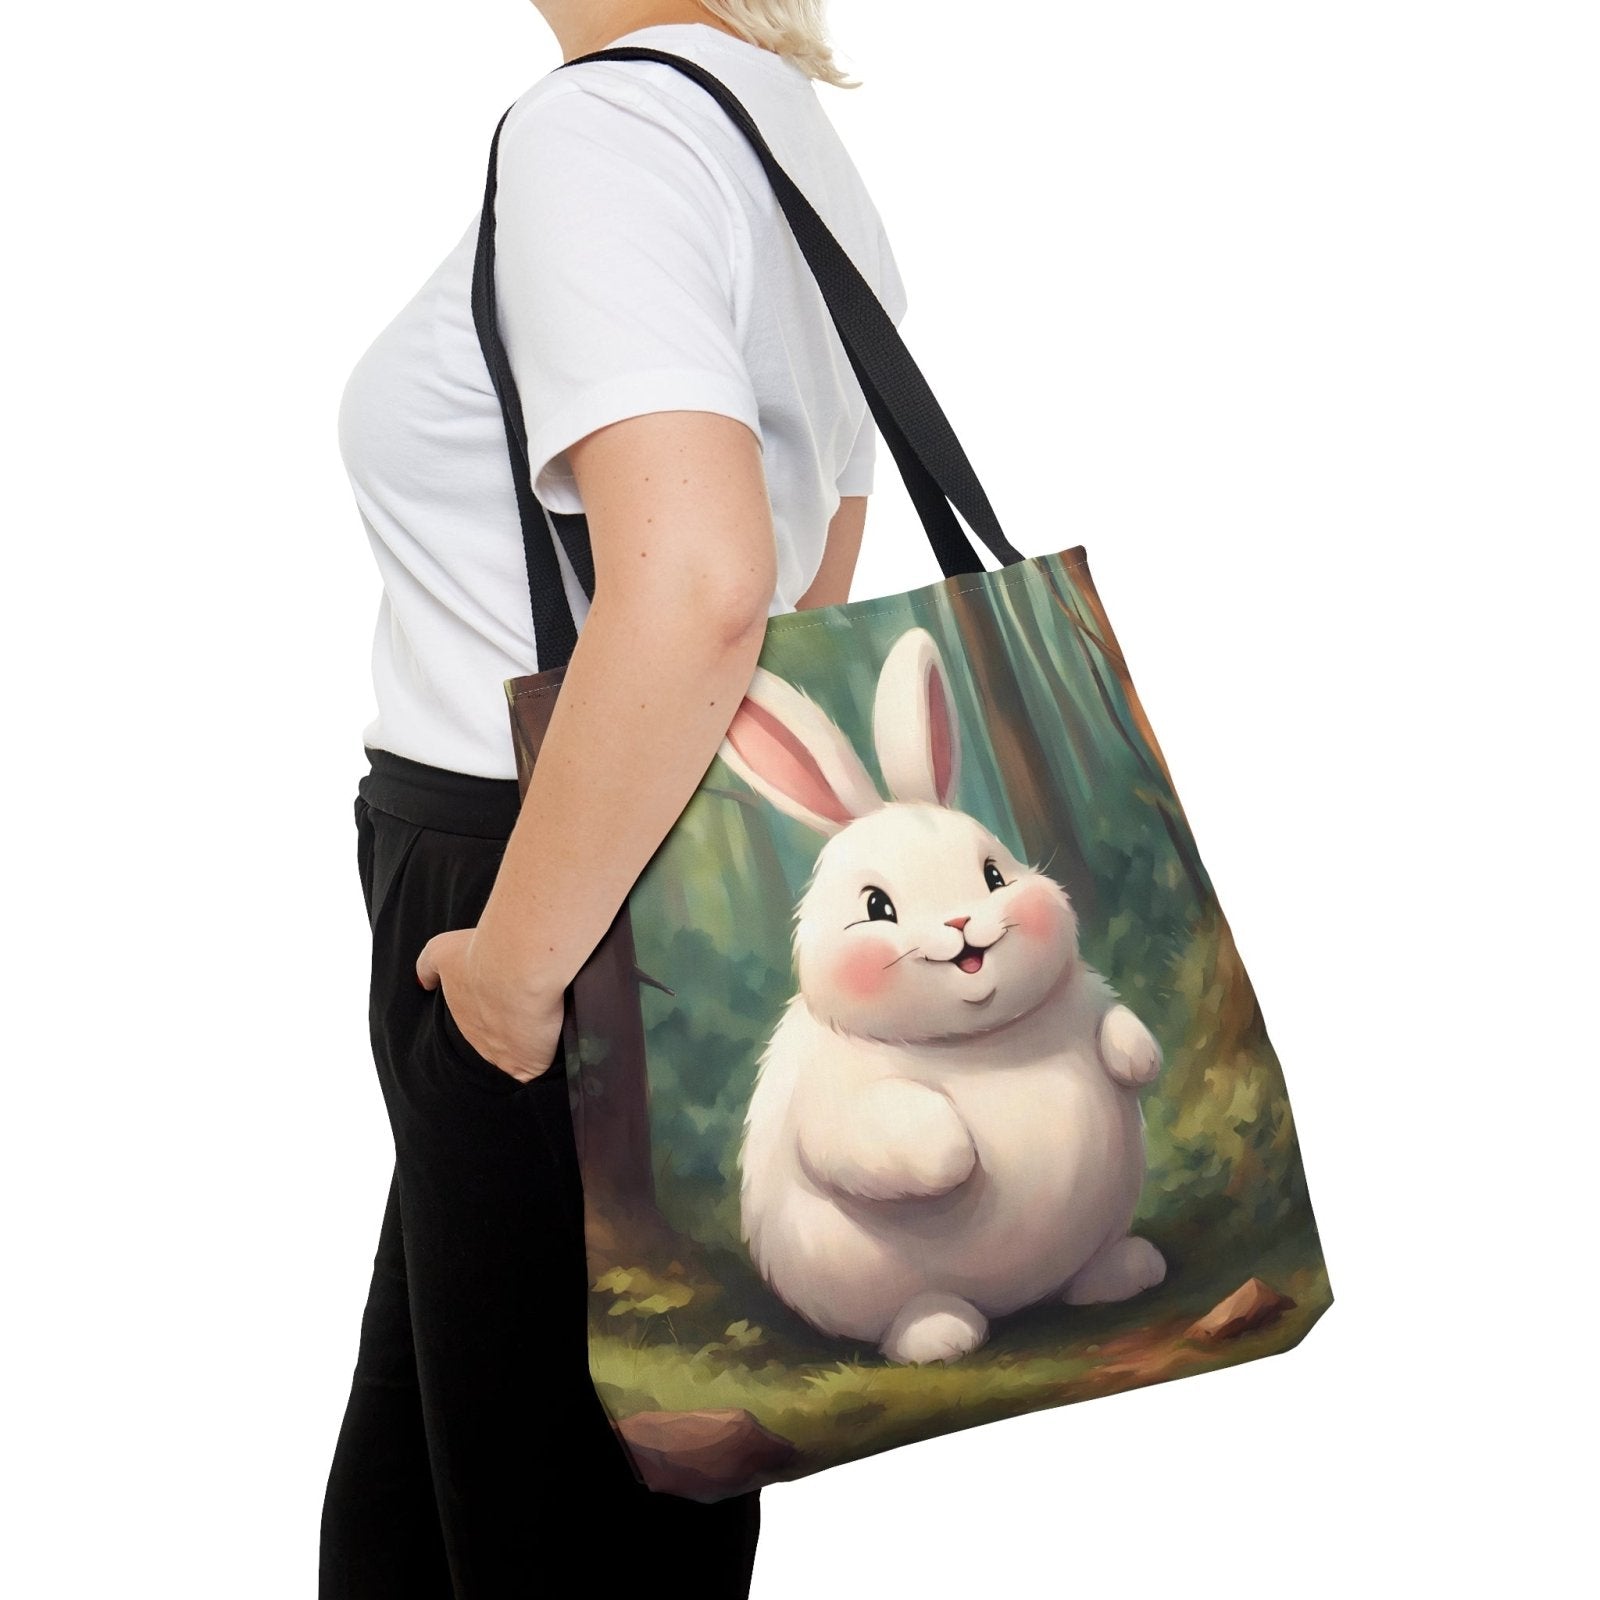 Hop Into Cuteness Tote Bag, adorable rabbit bag, cute bunny accessories - Subtle Blue M